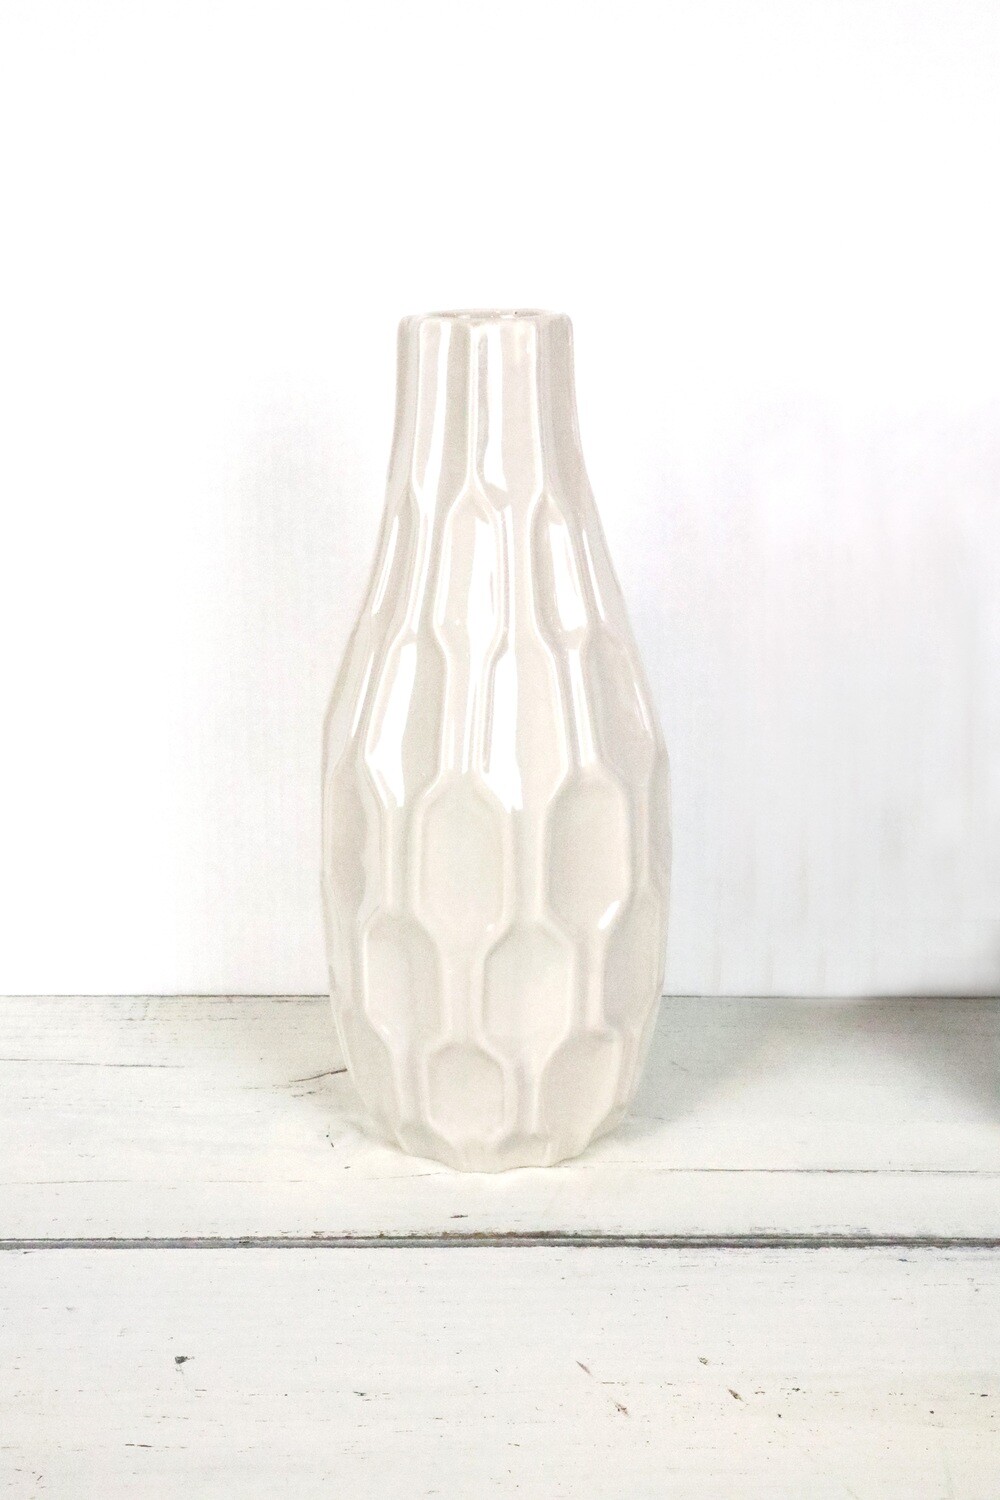 Geometric Textured Vases